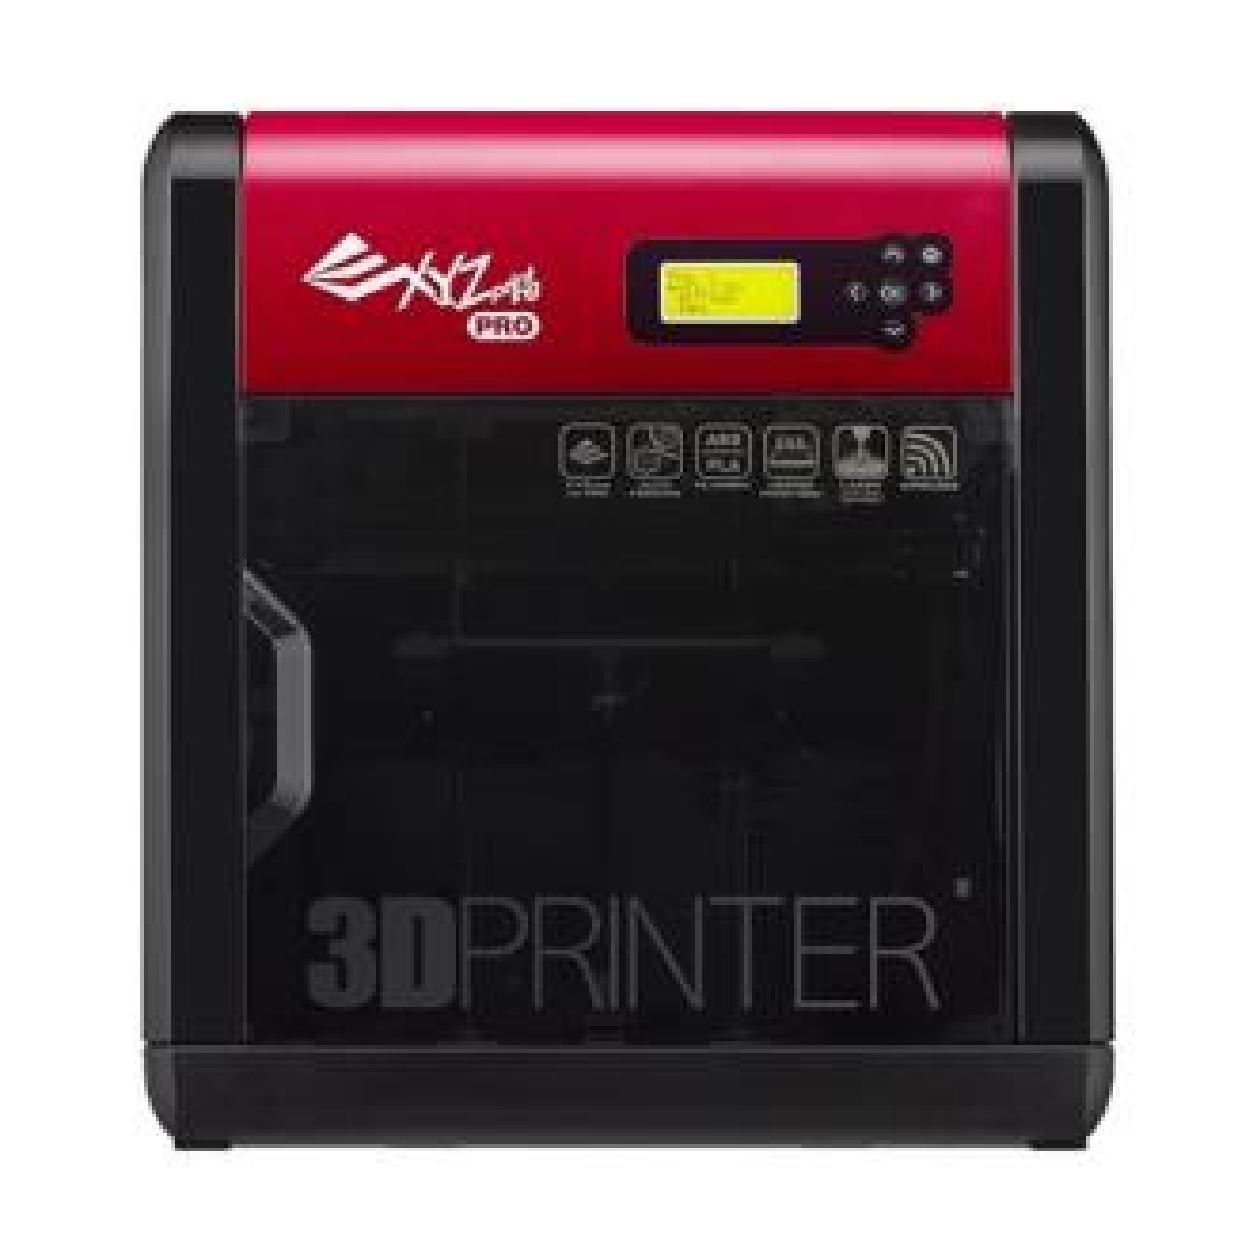 Impressora 3D XYZ Da Vinci Pro 1.0 Nova